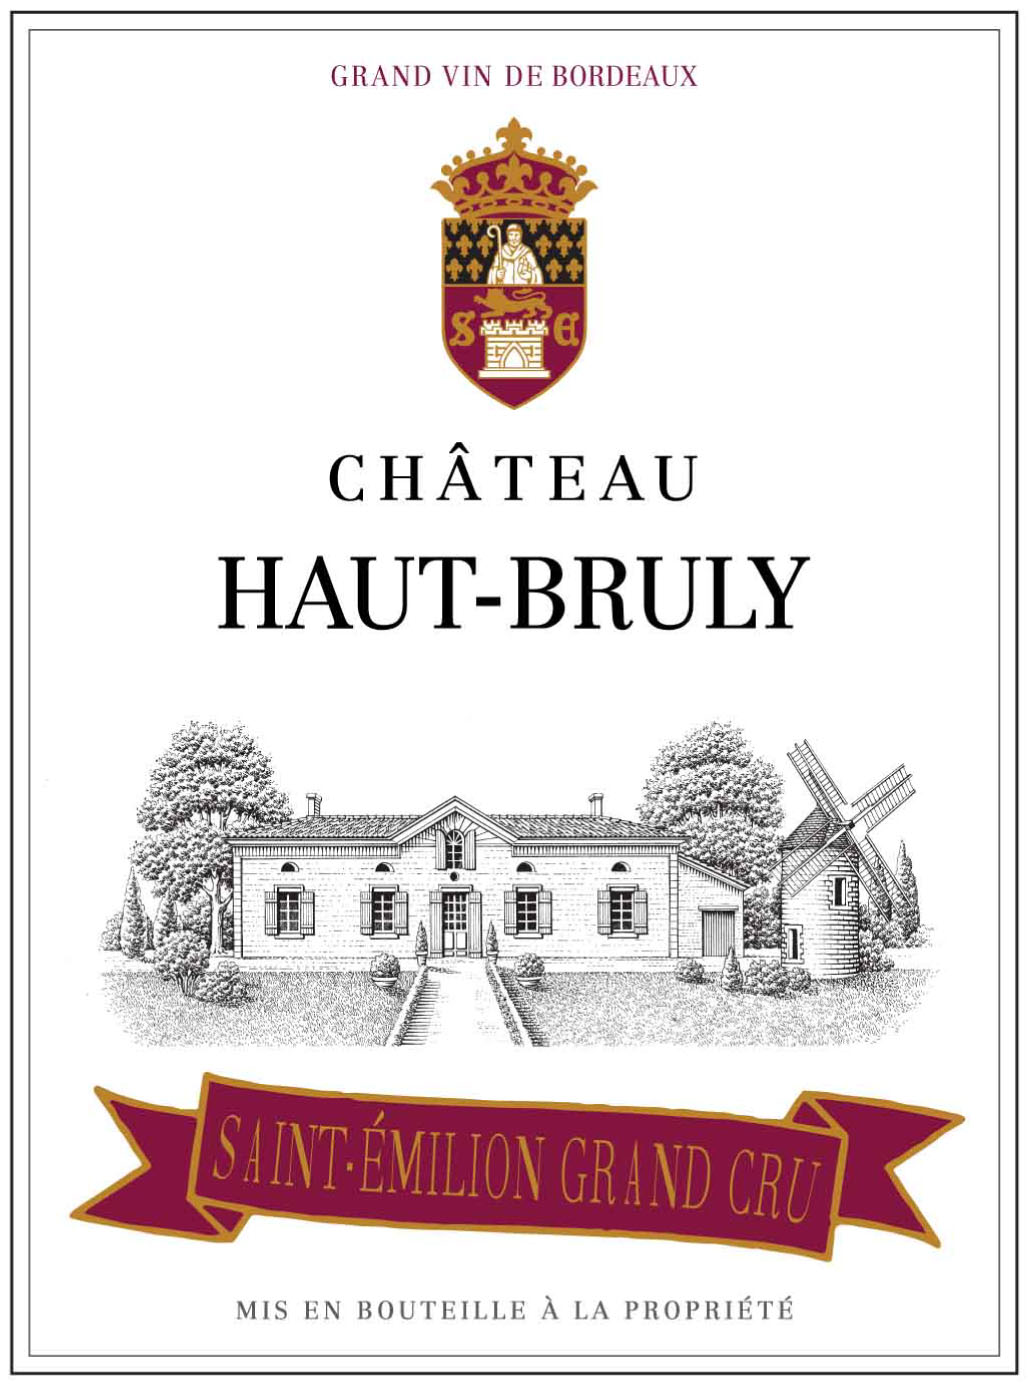 Chateau Haut-Bruly - Saint-Emilion Grand Cru label